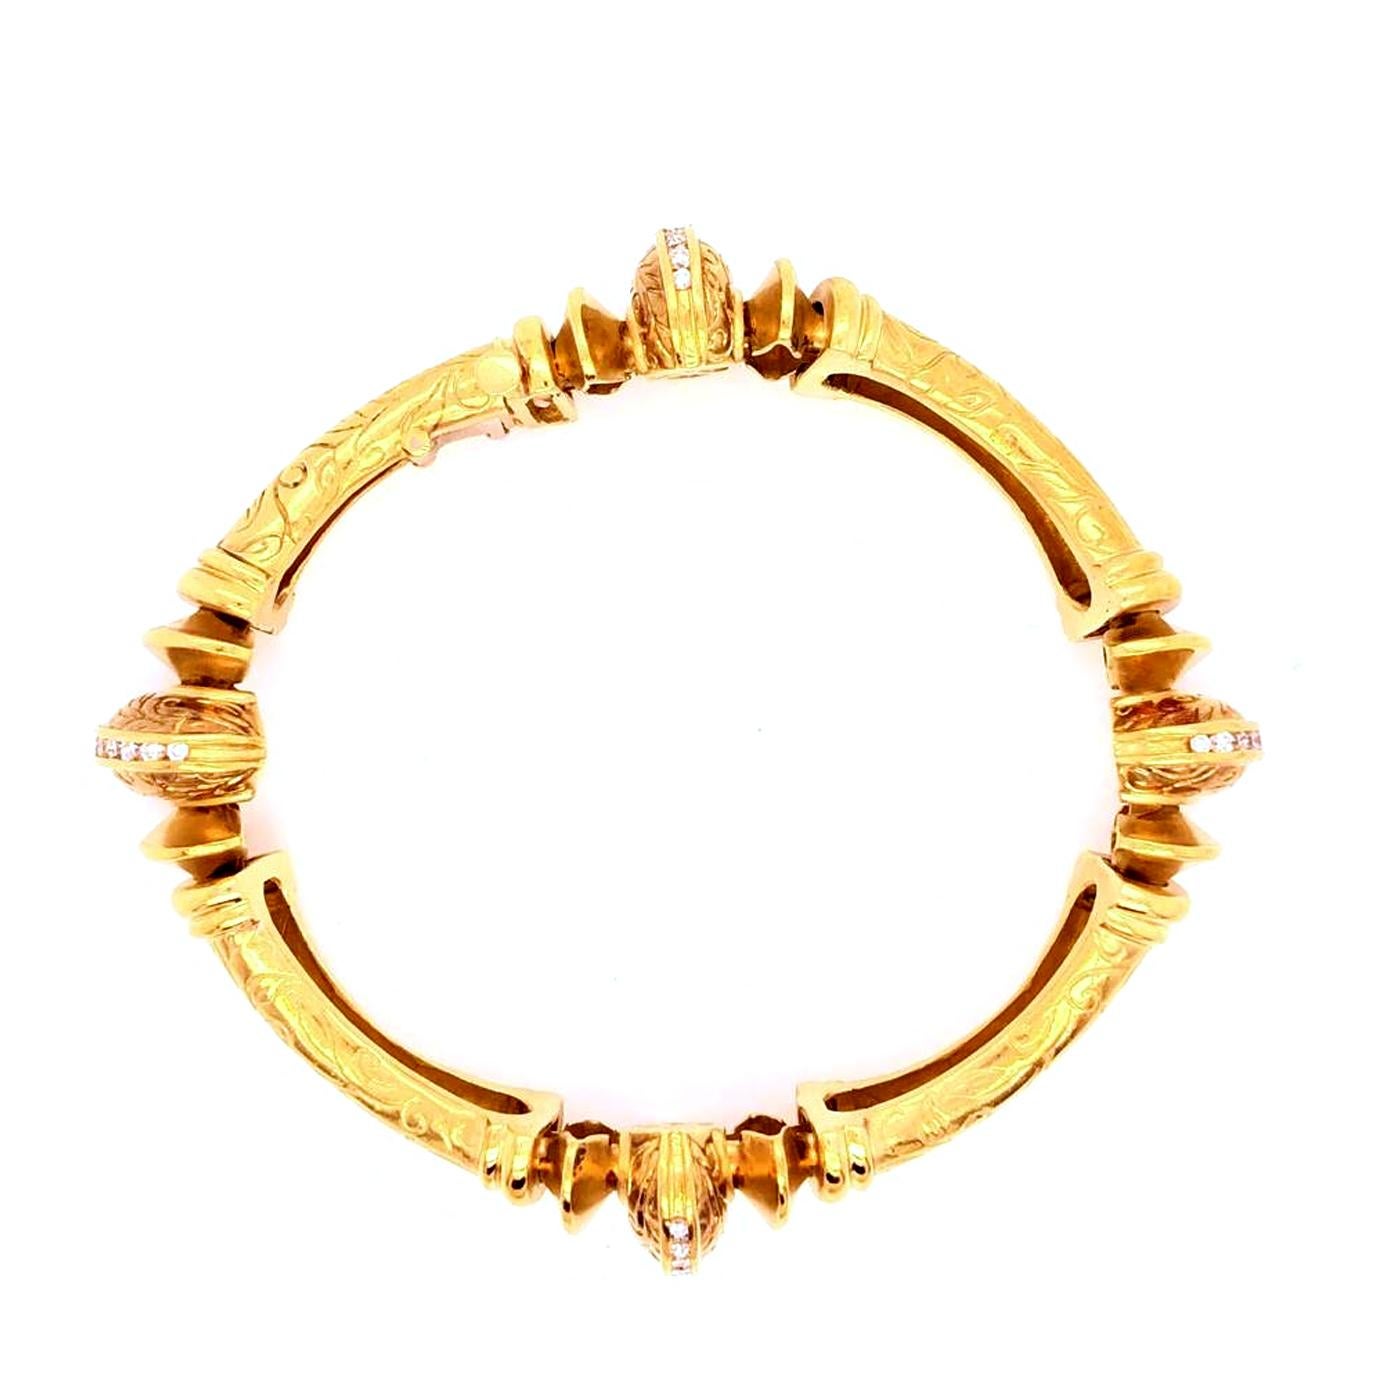 Gorgeous Charming 18k Yellow Gold Bracelet Bangle. This stunning Bracelet is 7